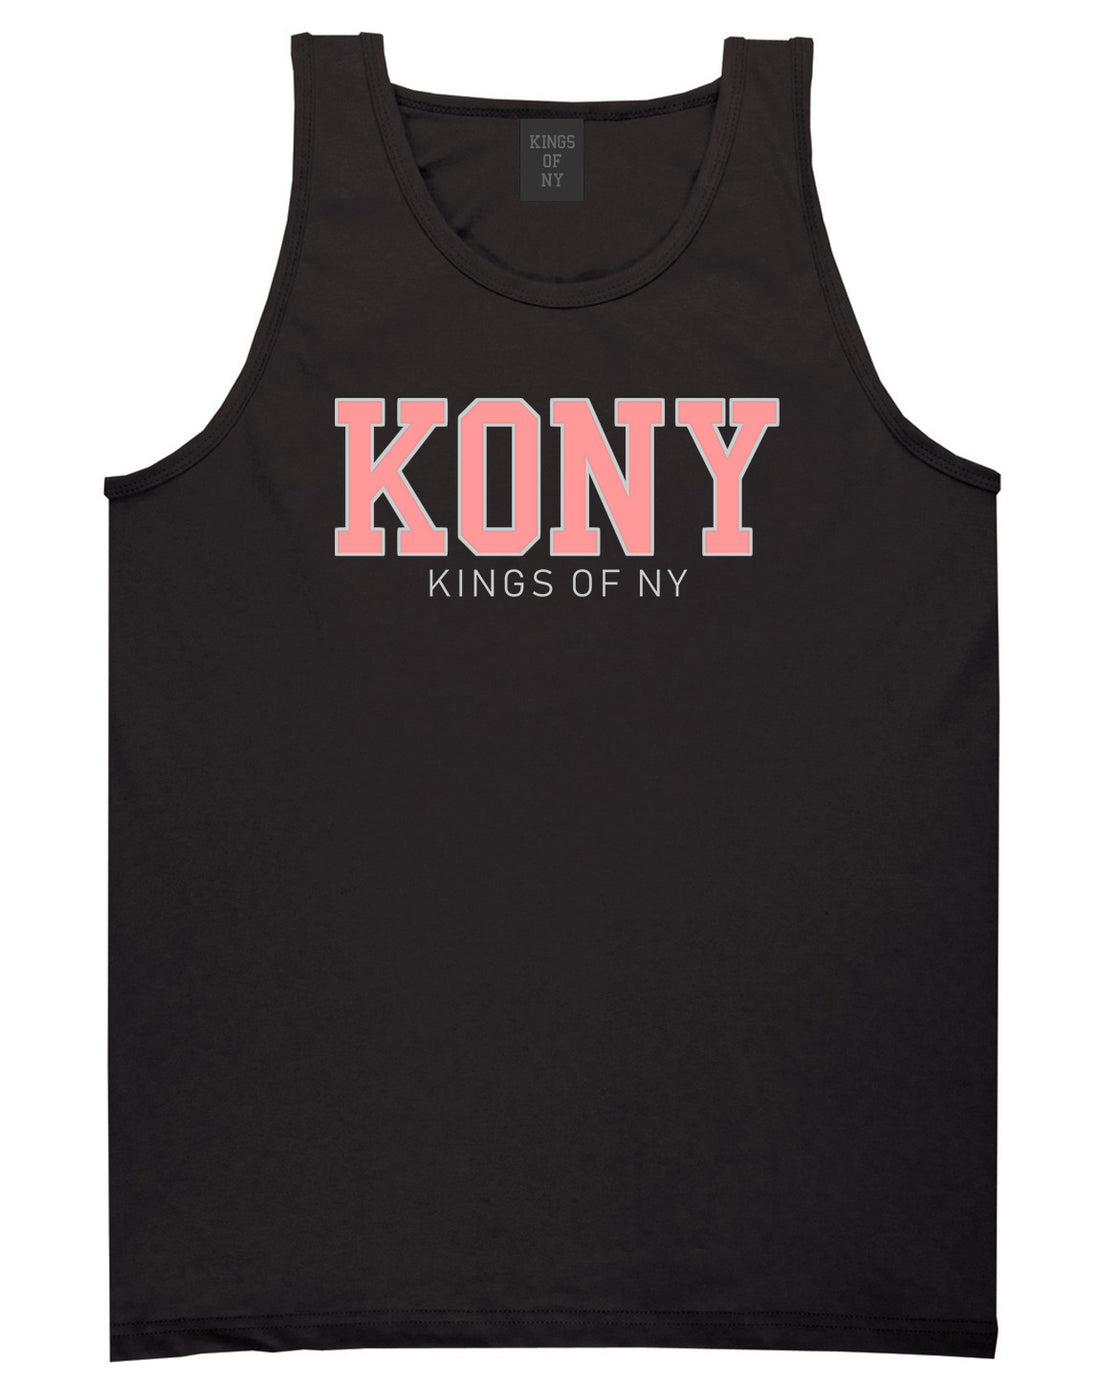 KONY College Mens Tank Top Shirt Black by Kings Of NY